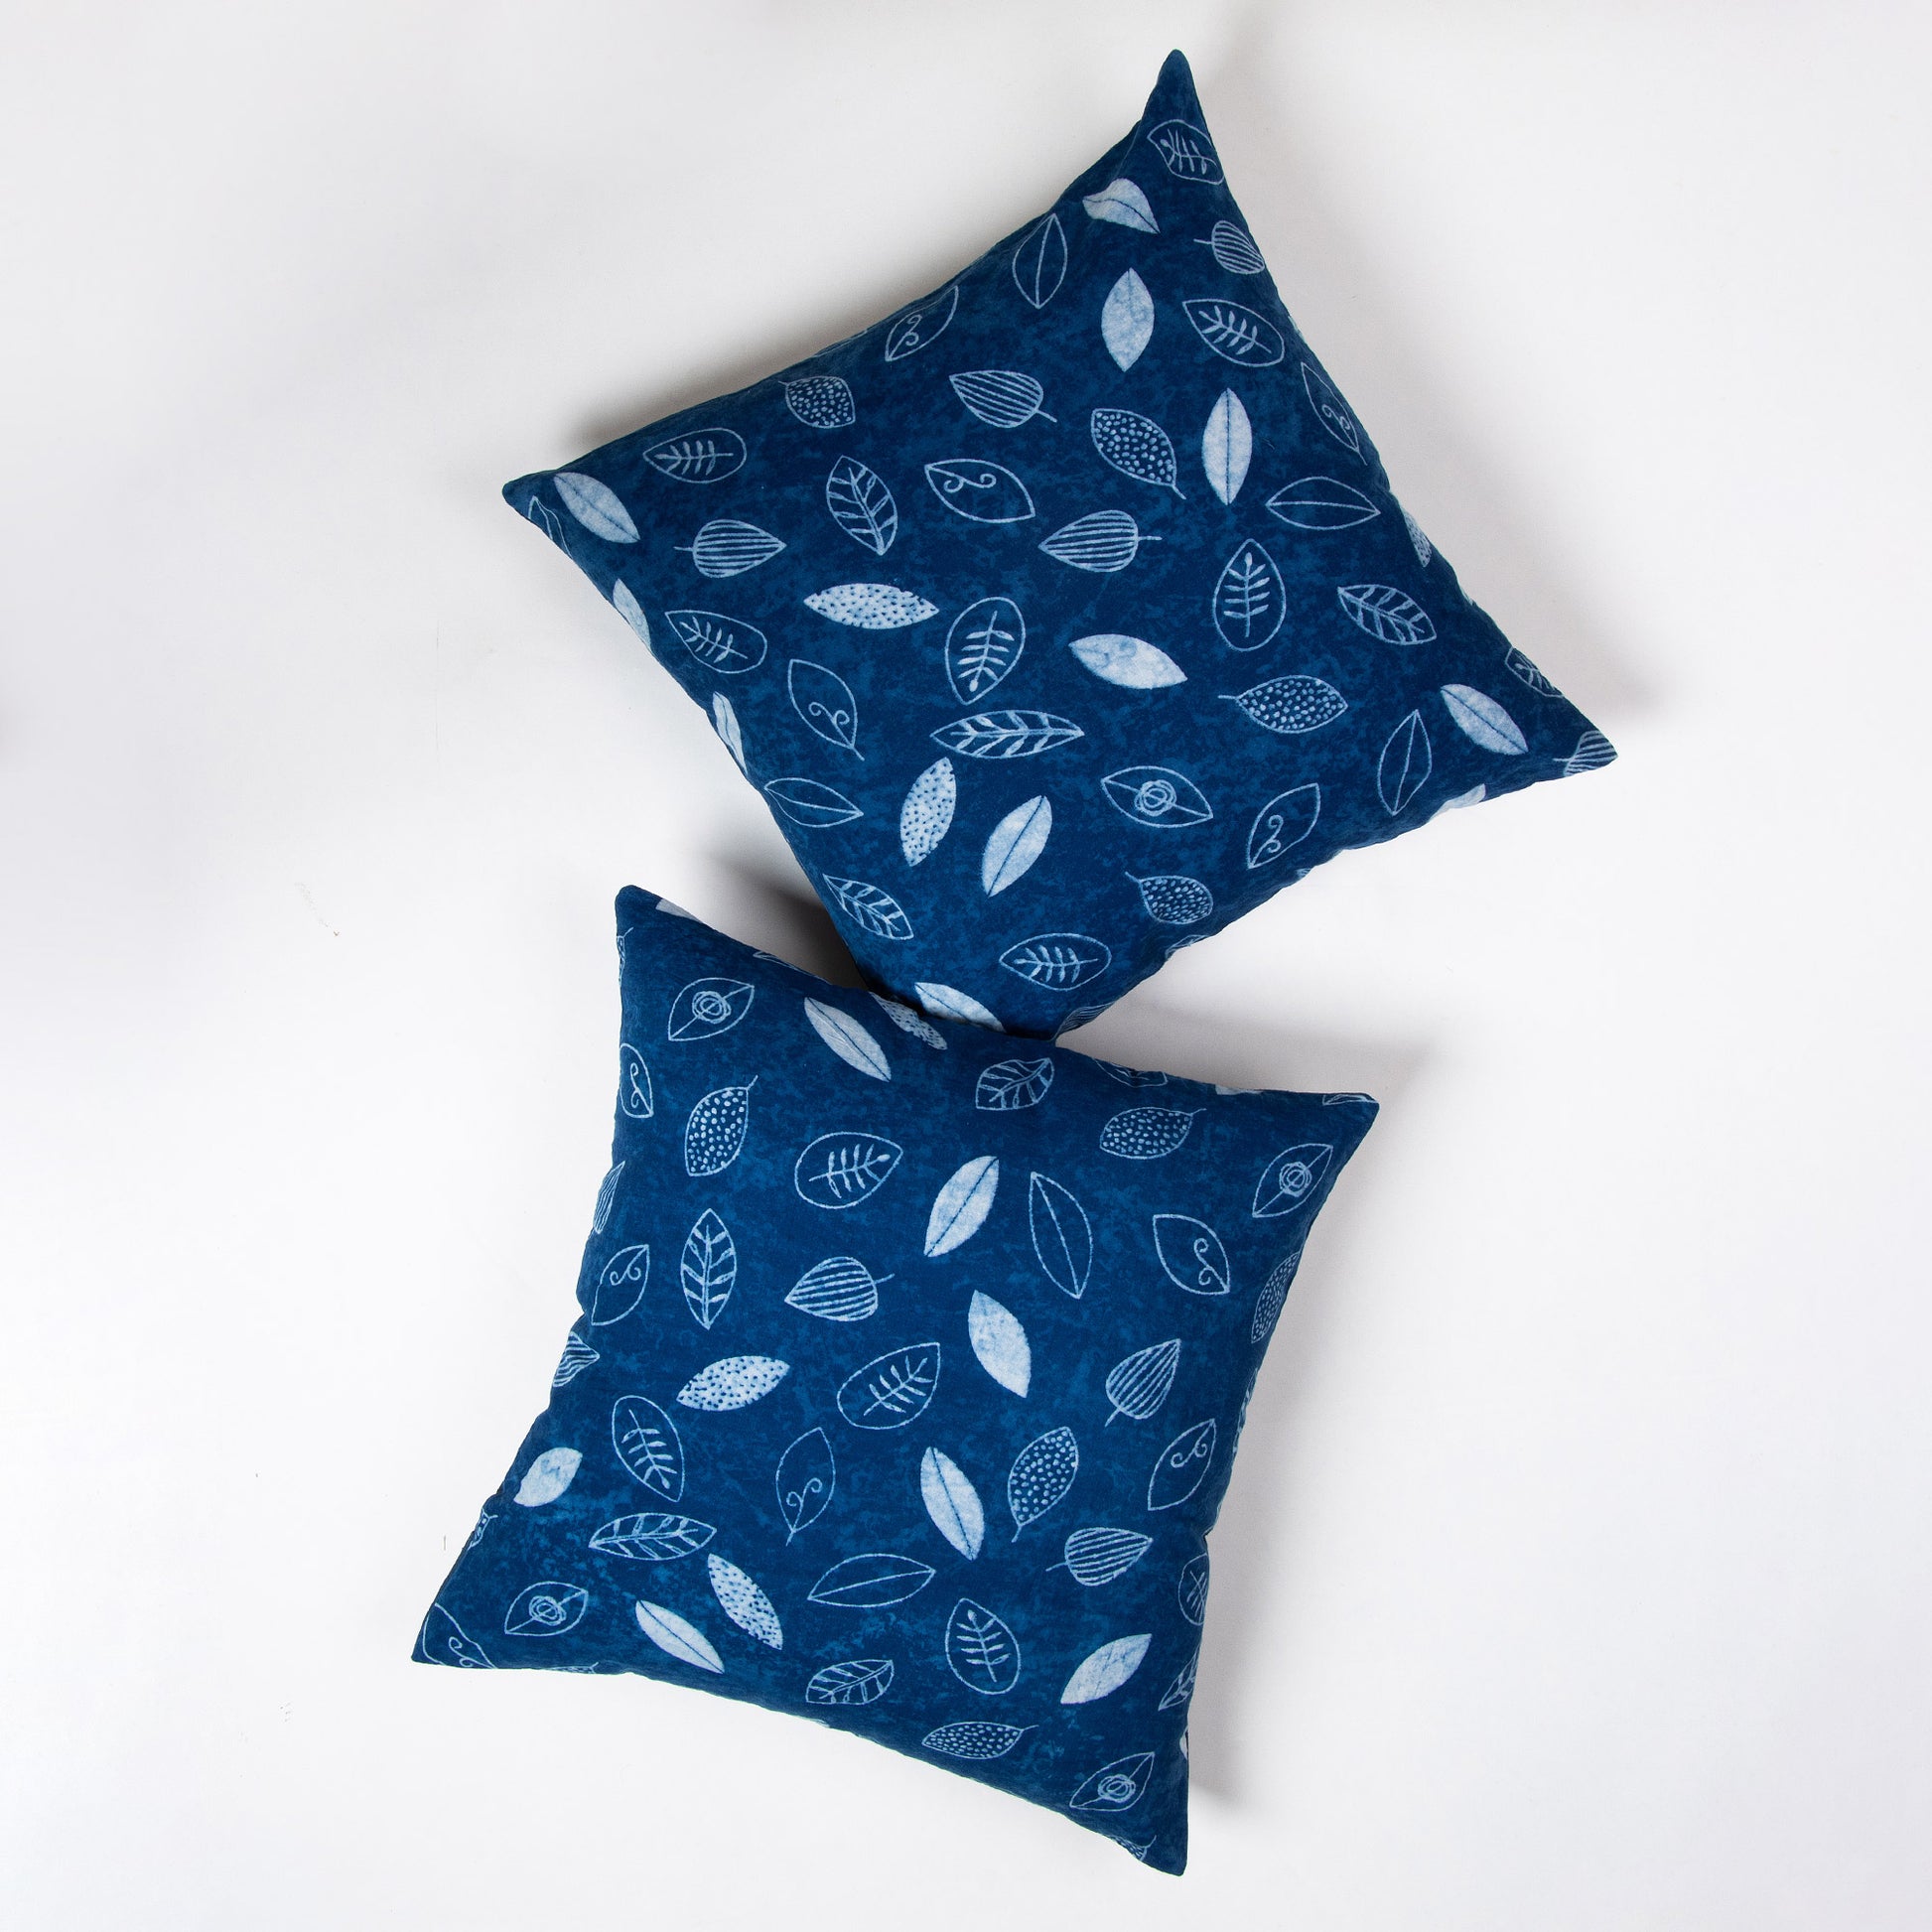 Hand Blue Leaf Block Print Cushions Cover Online